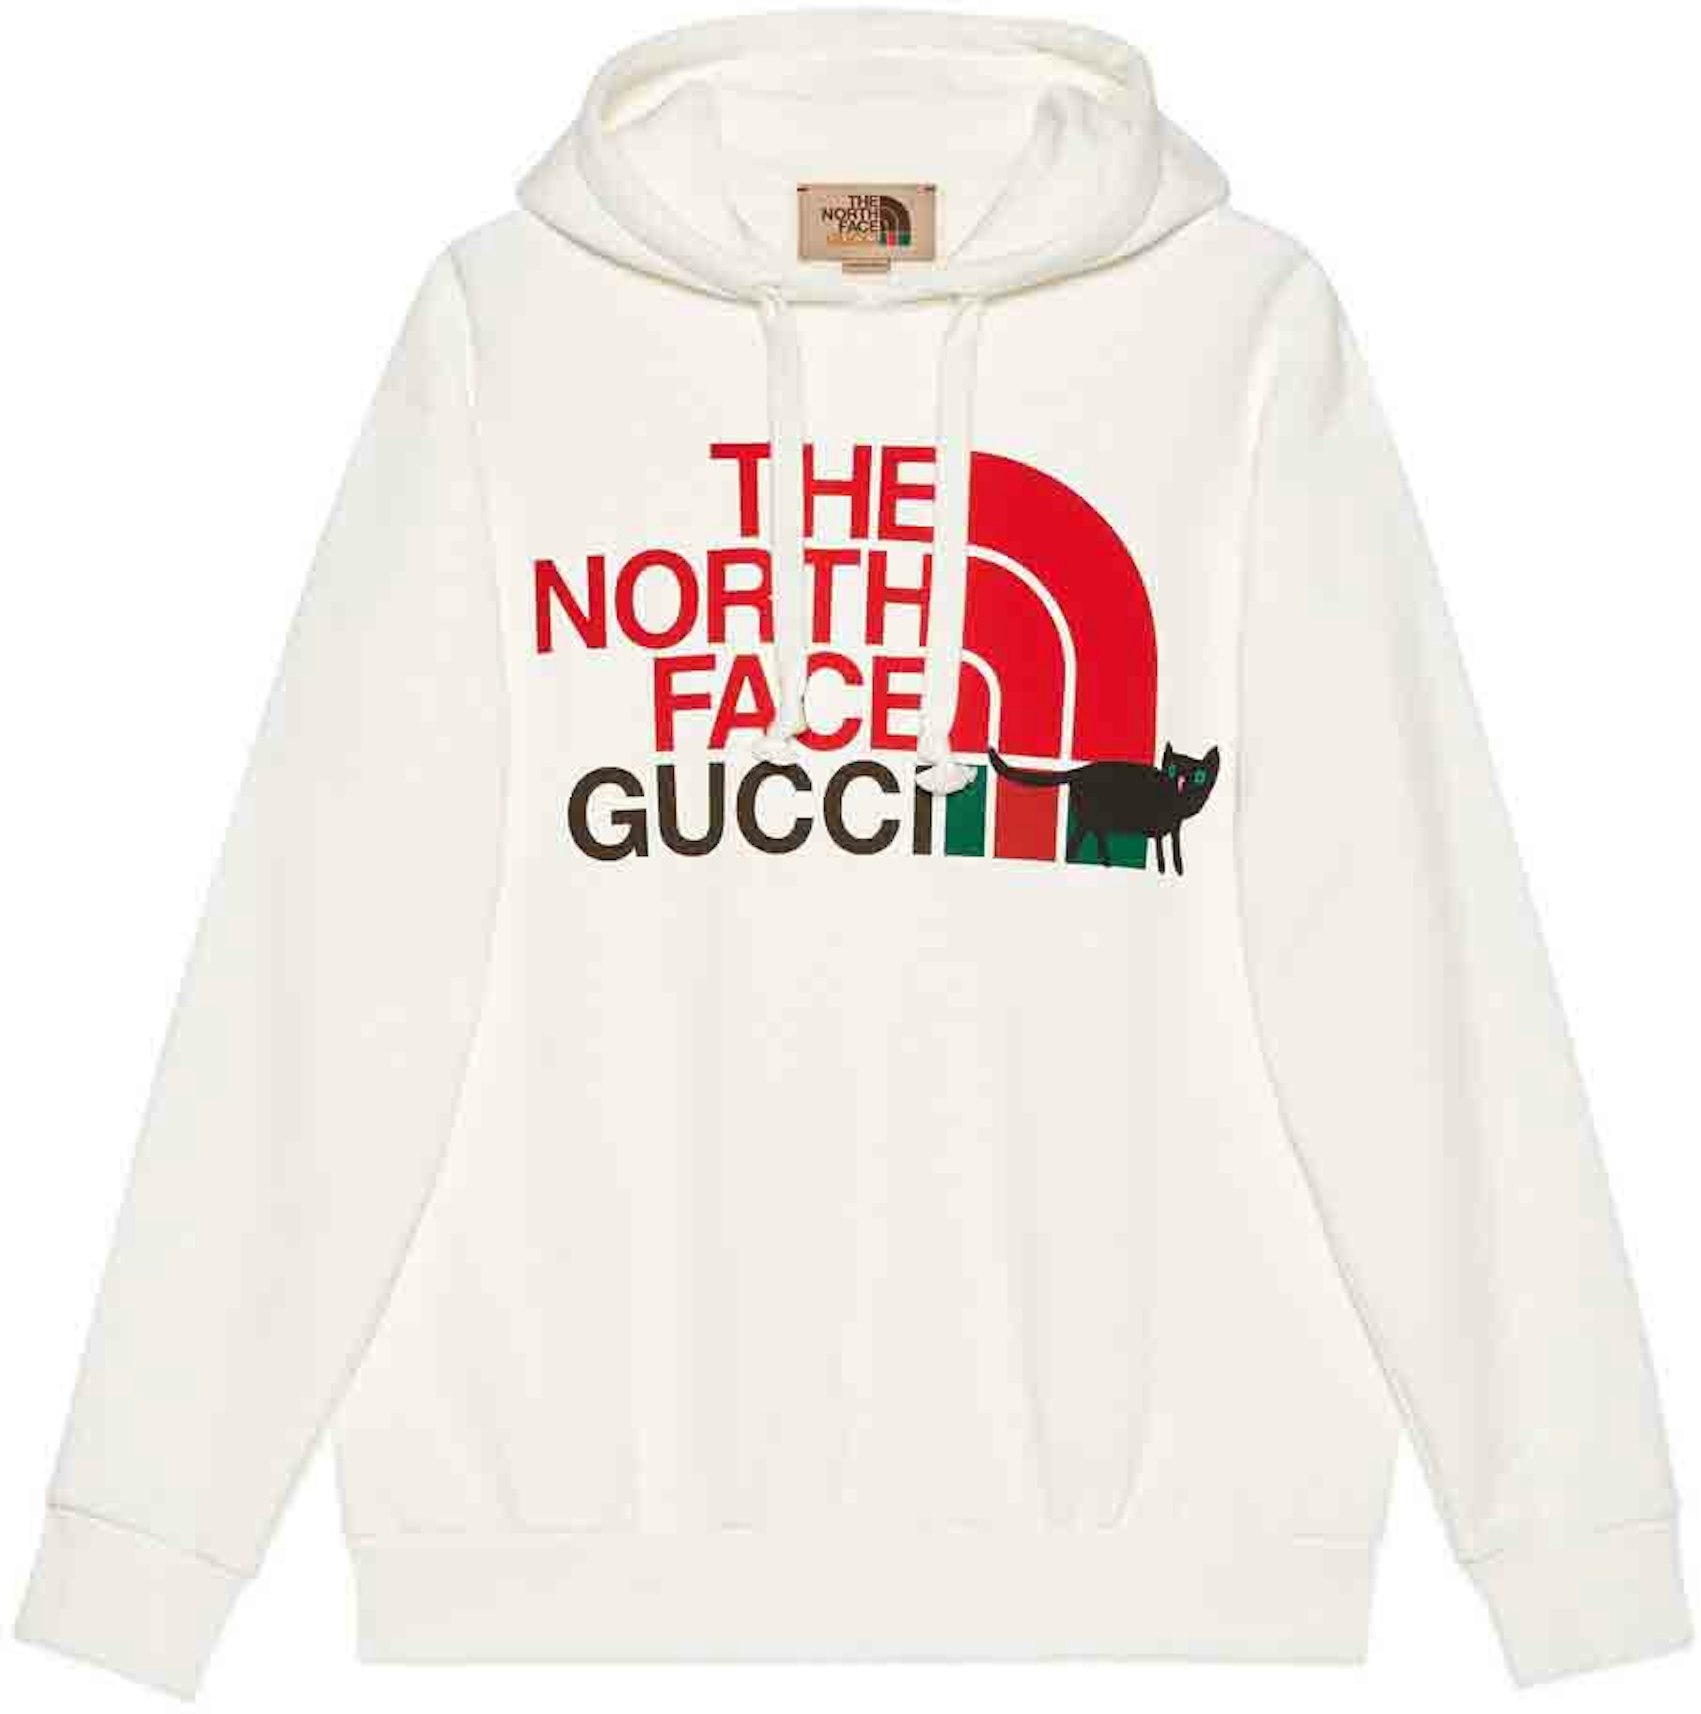 Gucci x North Face Sweatshirt FW21 Men's - US